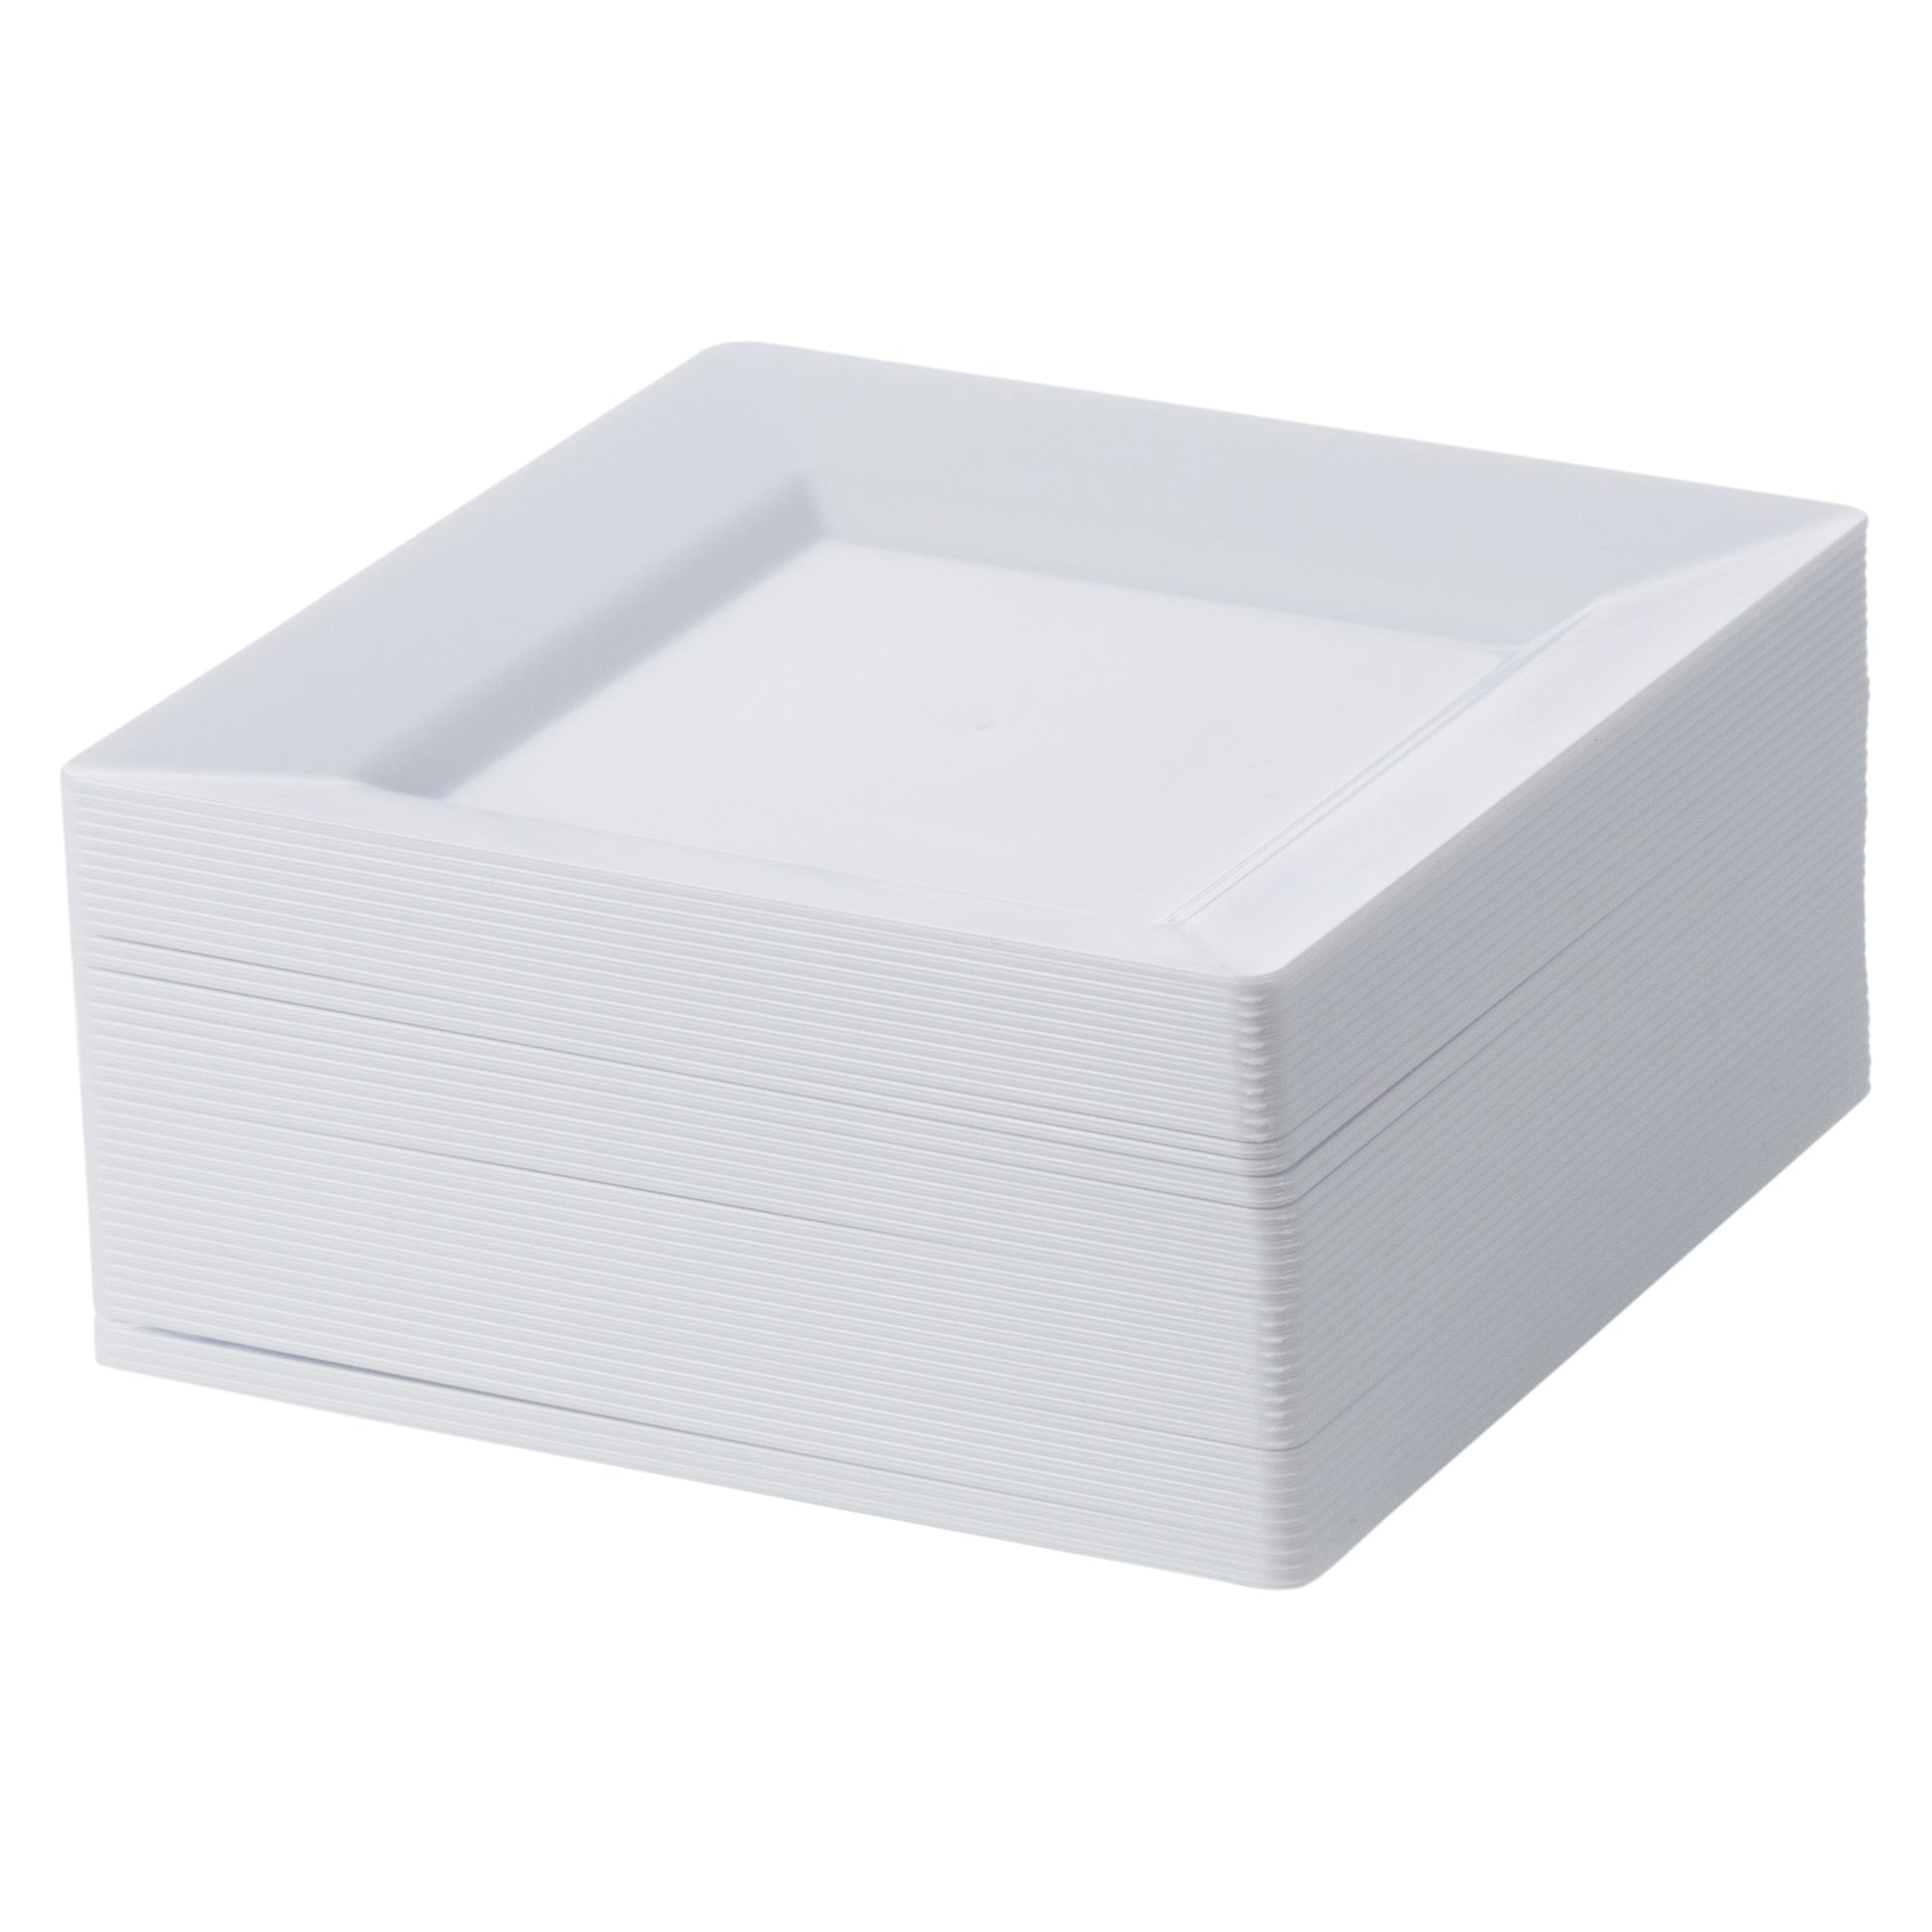 White Square Plastic Plates 10 Pack - Carre 4.5 inch Salad/Dessert Plates - Posh Setting